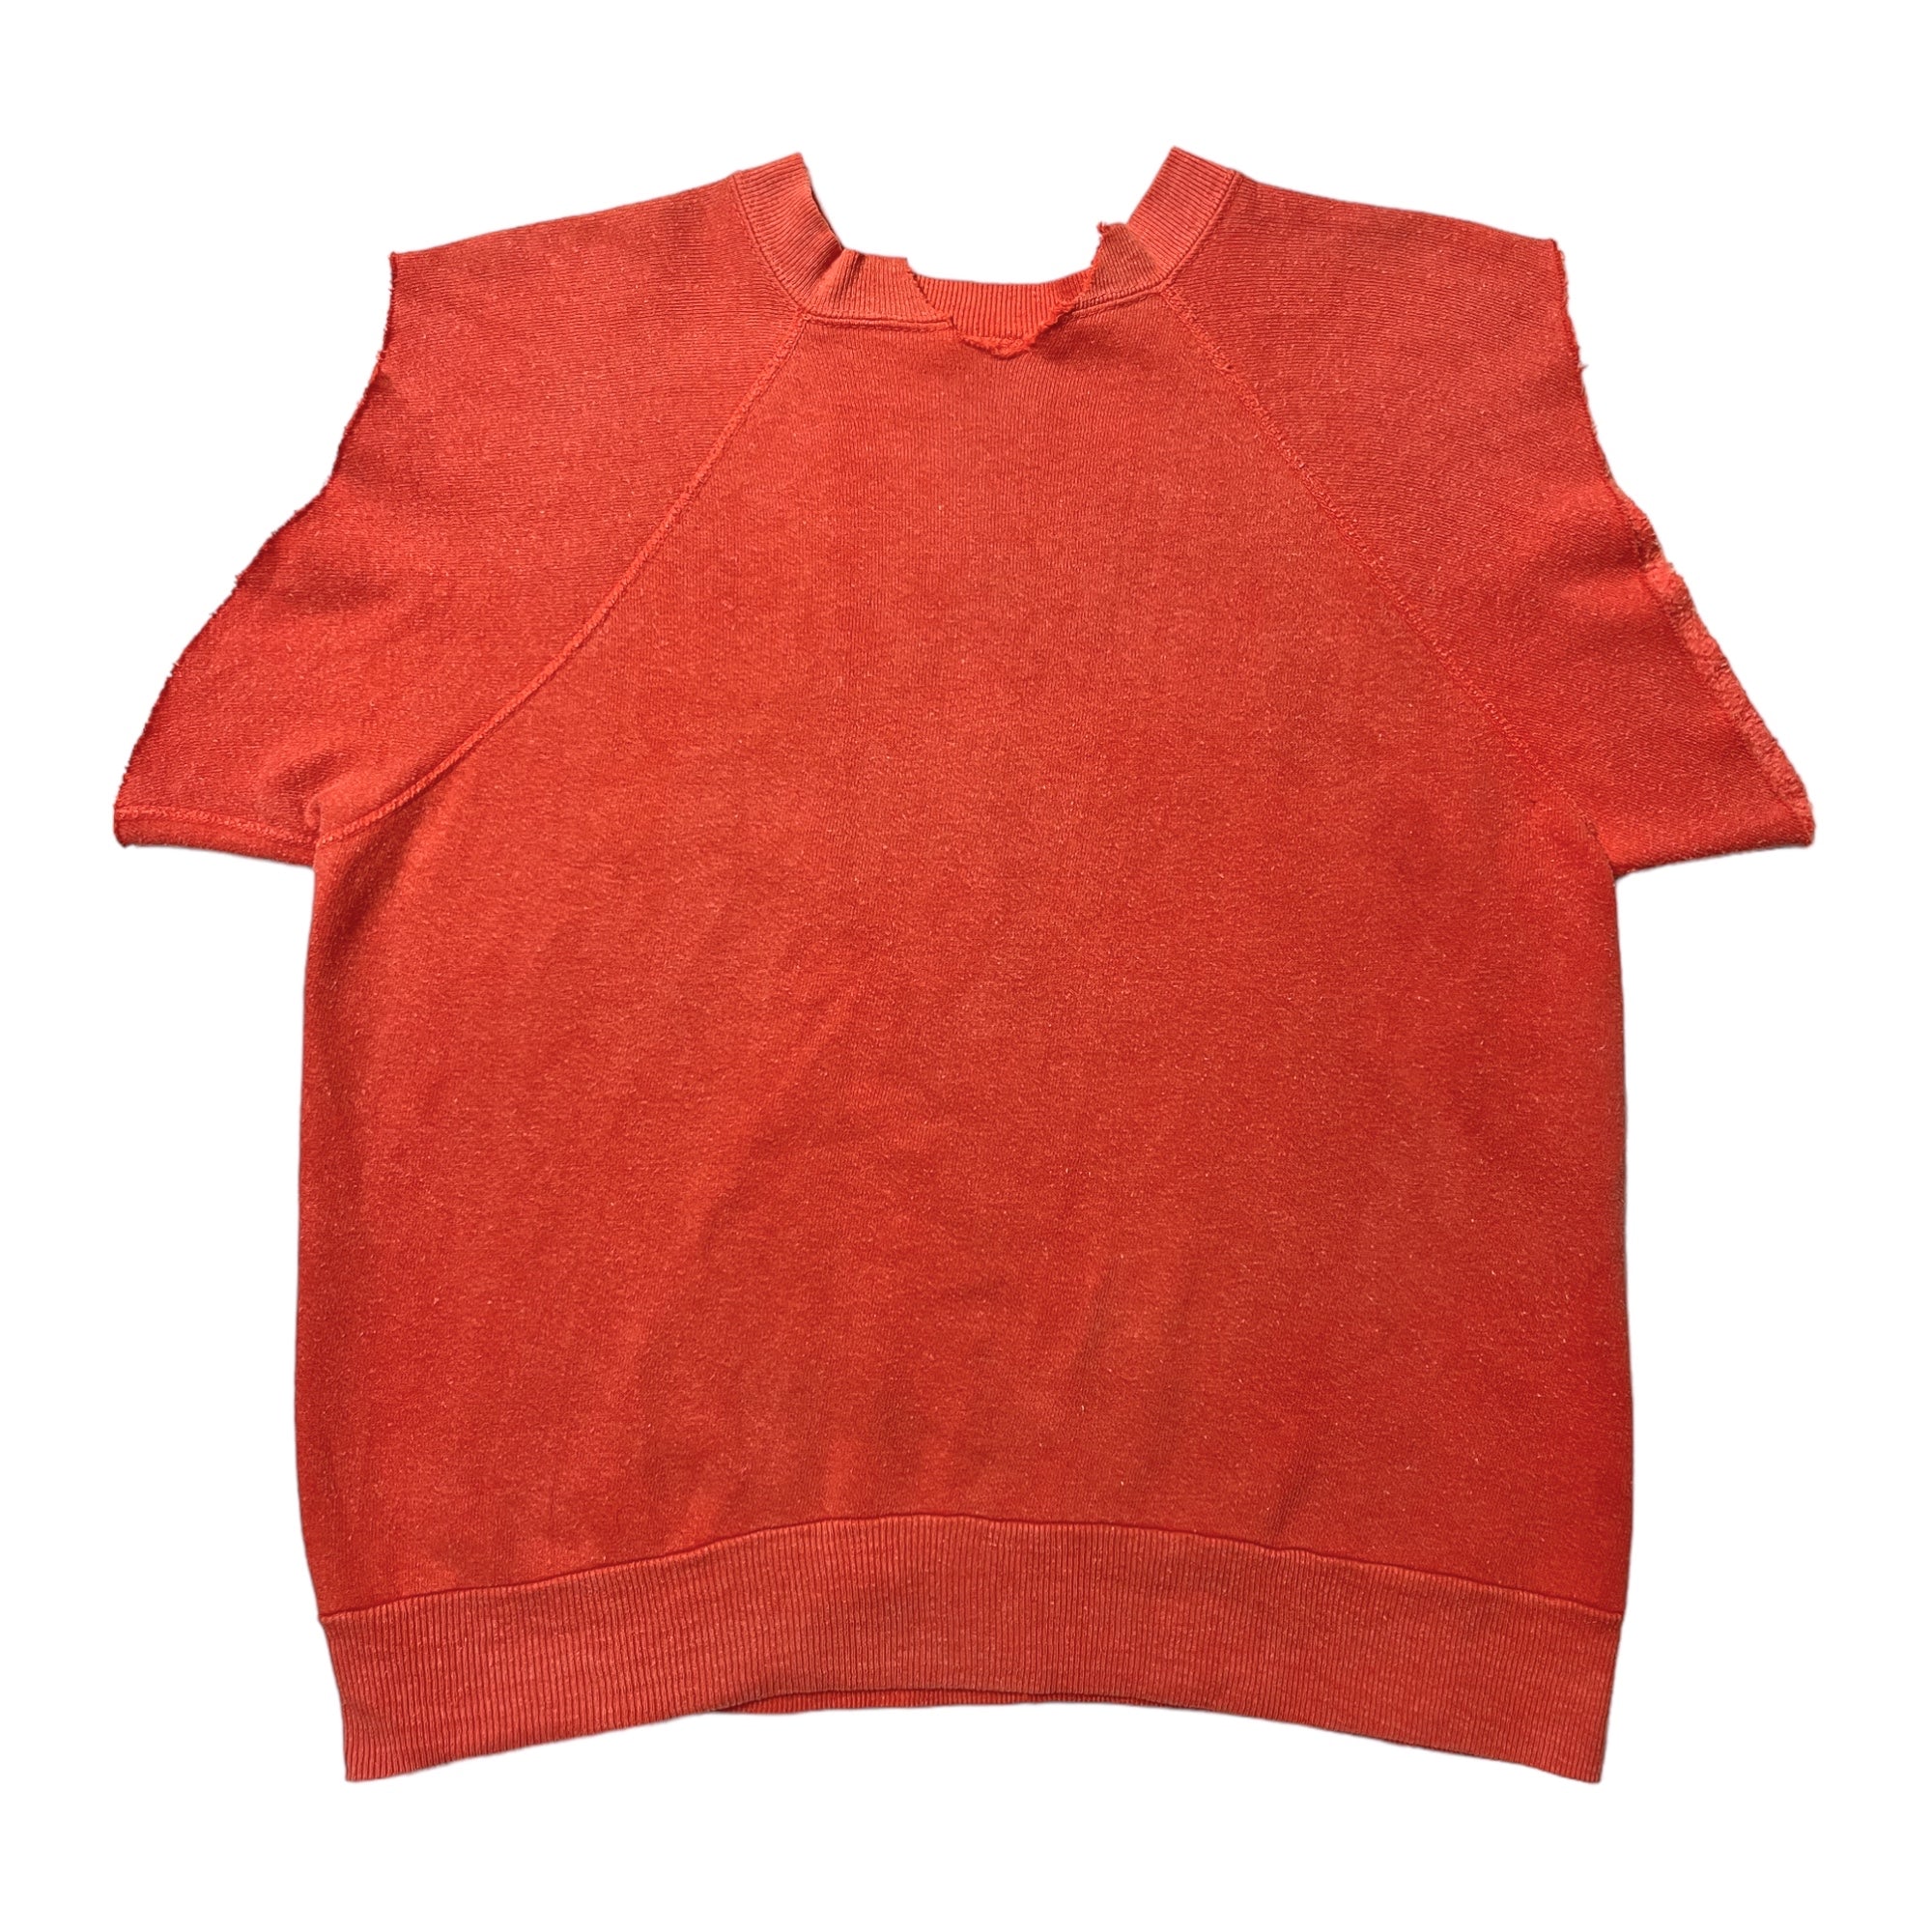 1970s Cutoff Raglan Crewneck Sweatshirt - Faded Orange - S/M